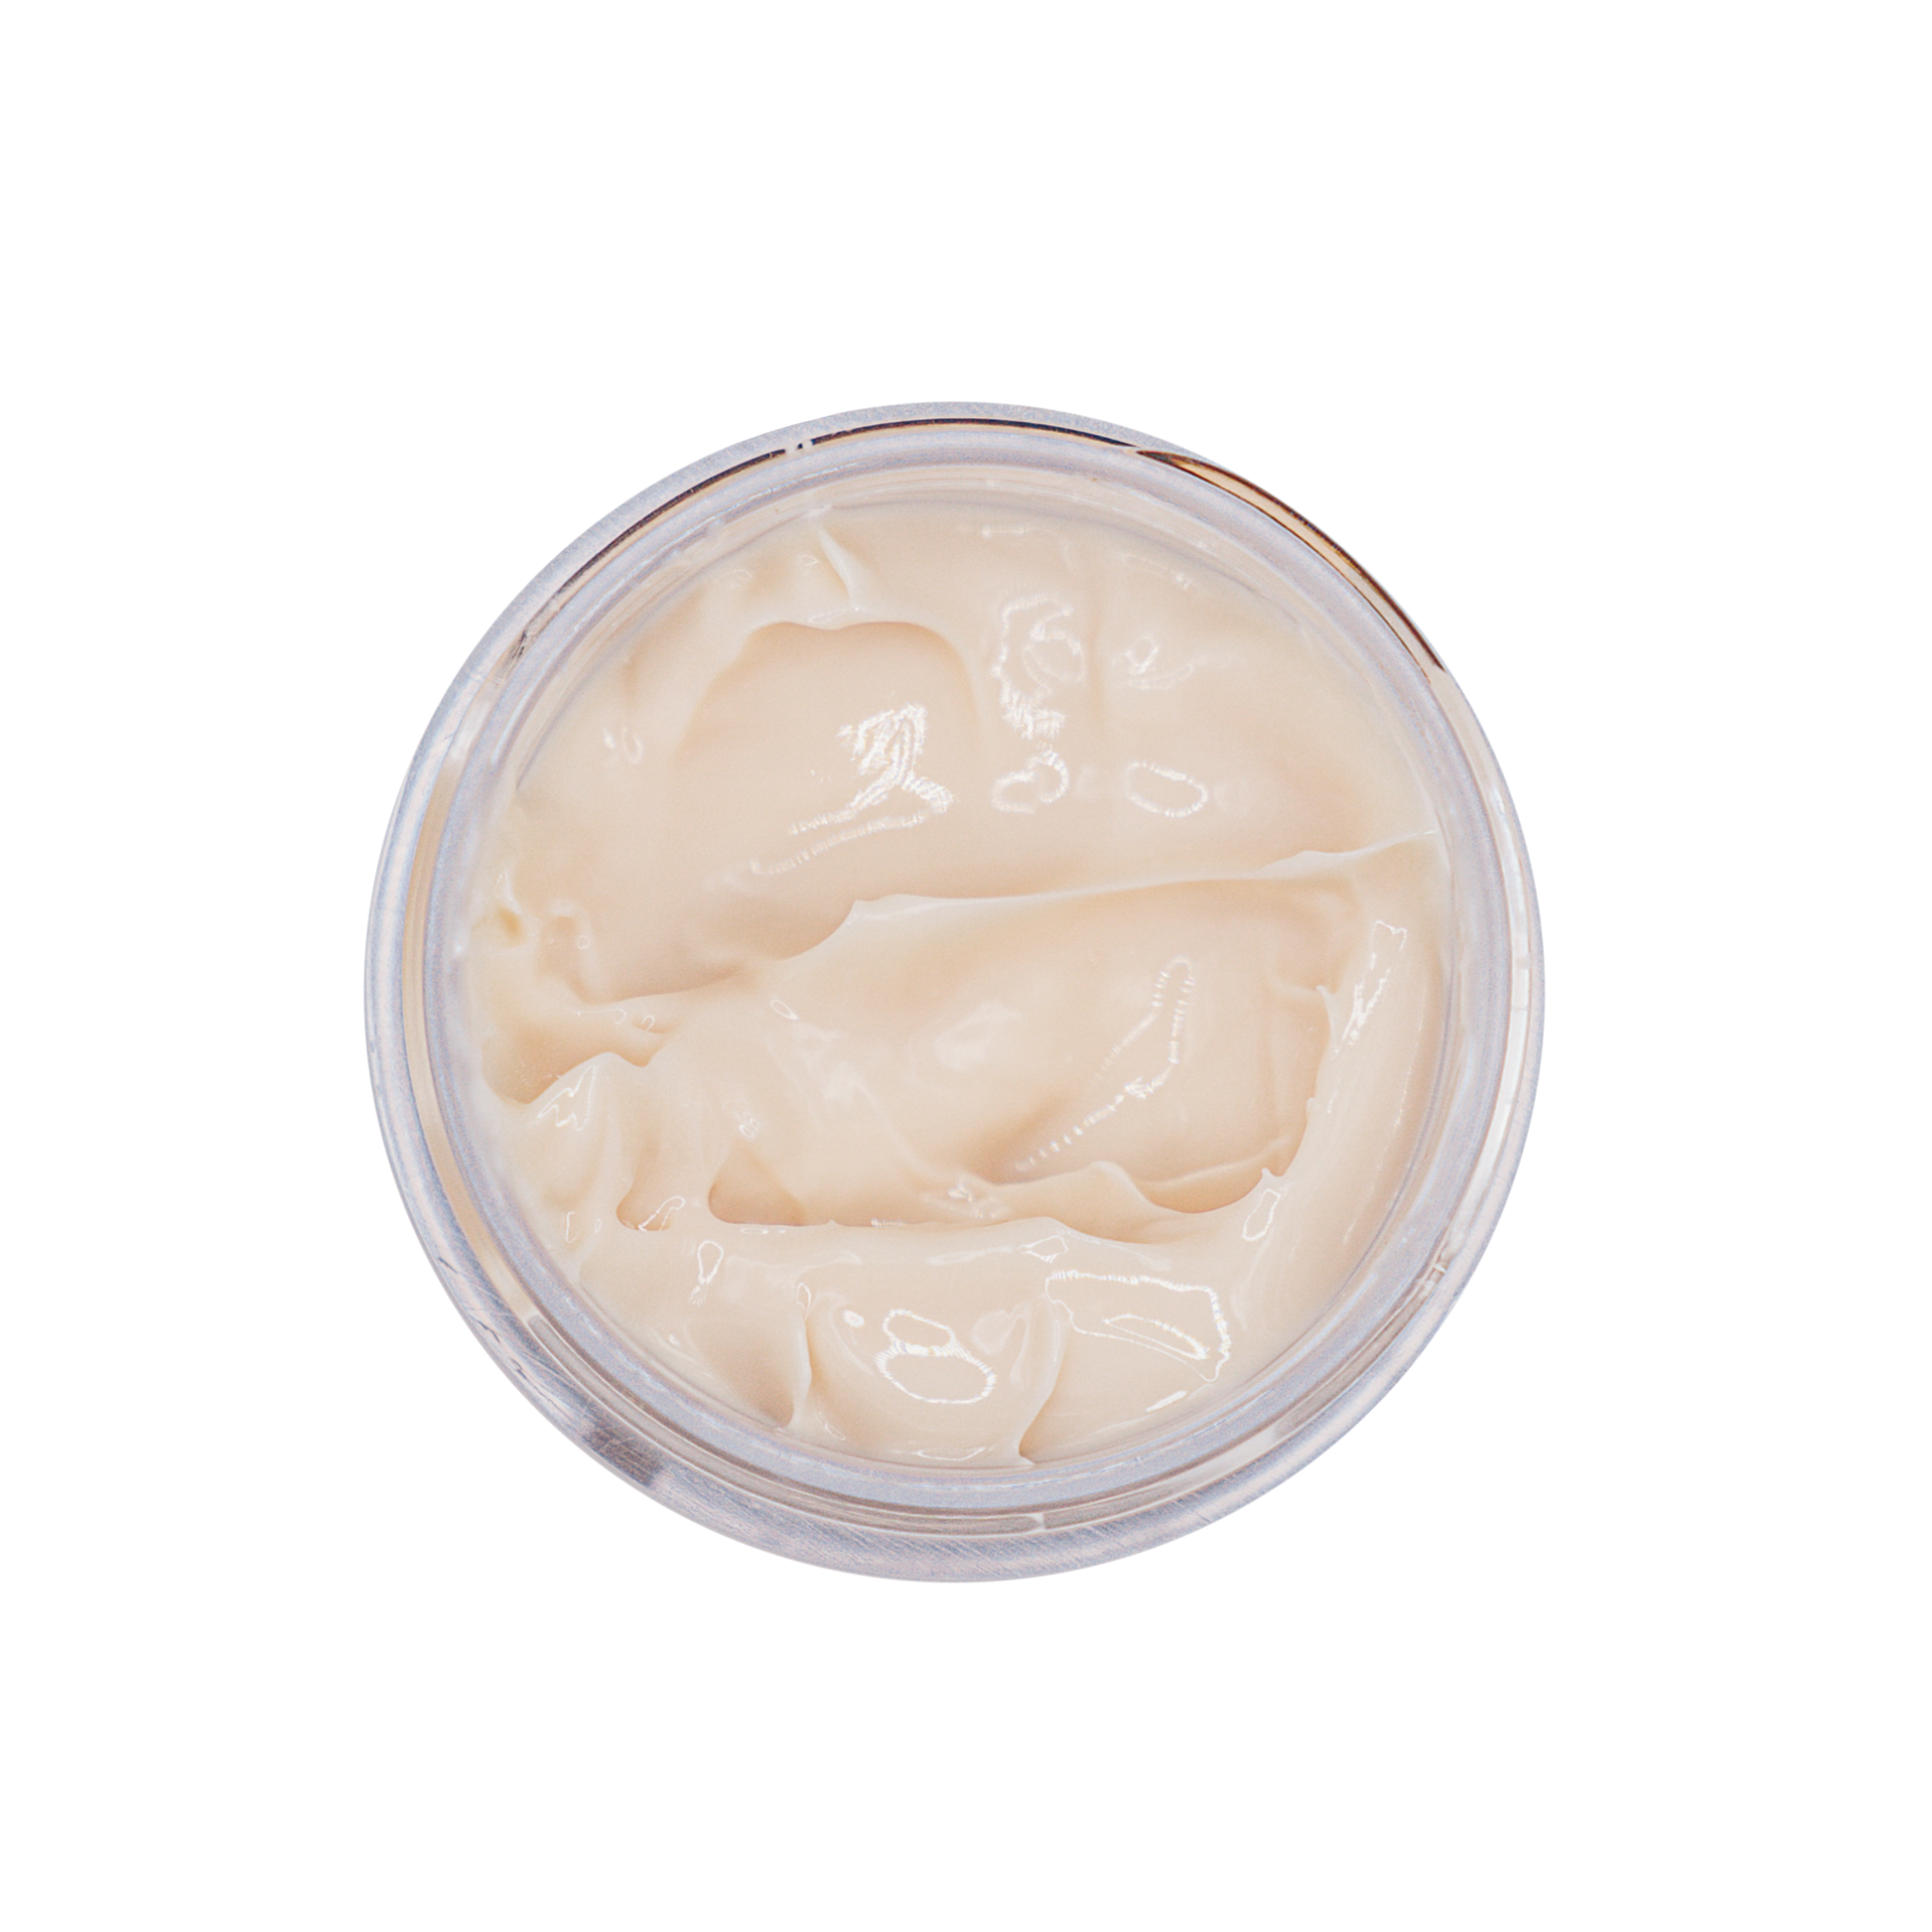 CoQ-10 Toning Crème - - White Egret Personal Care